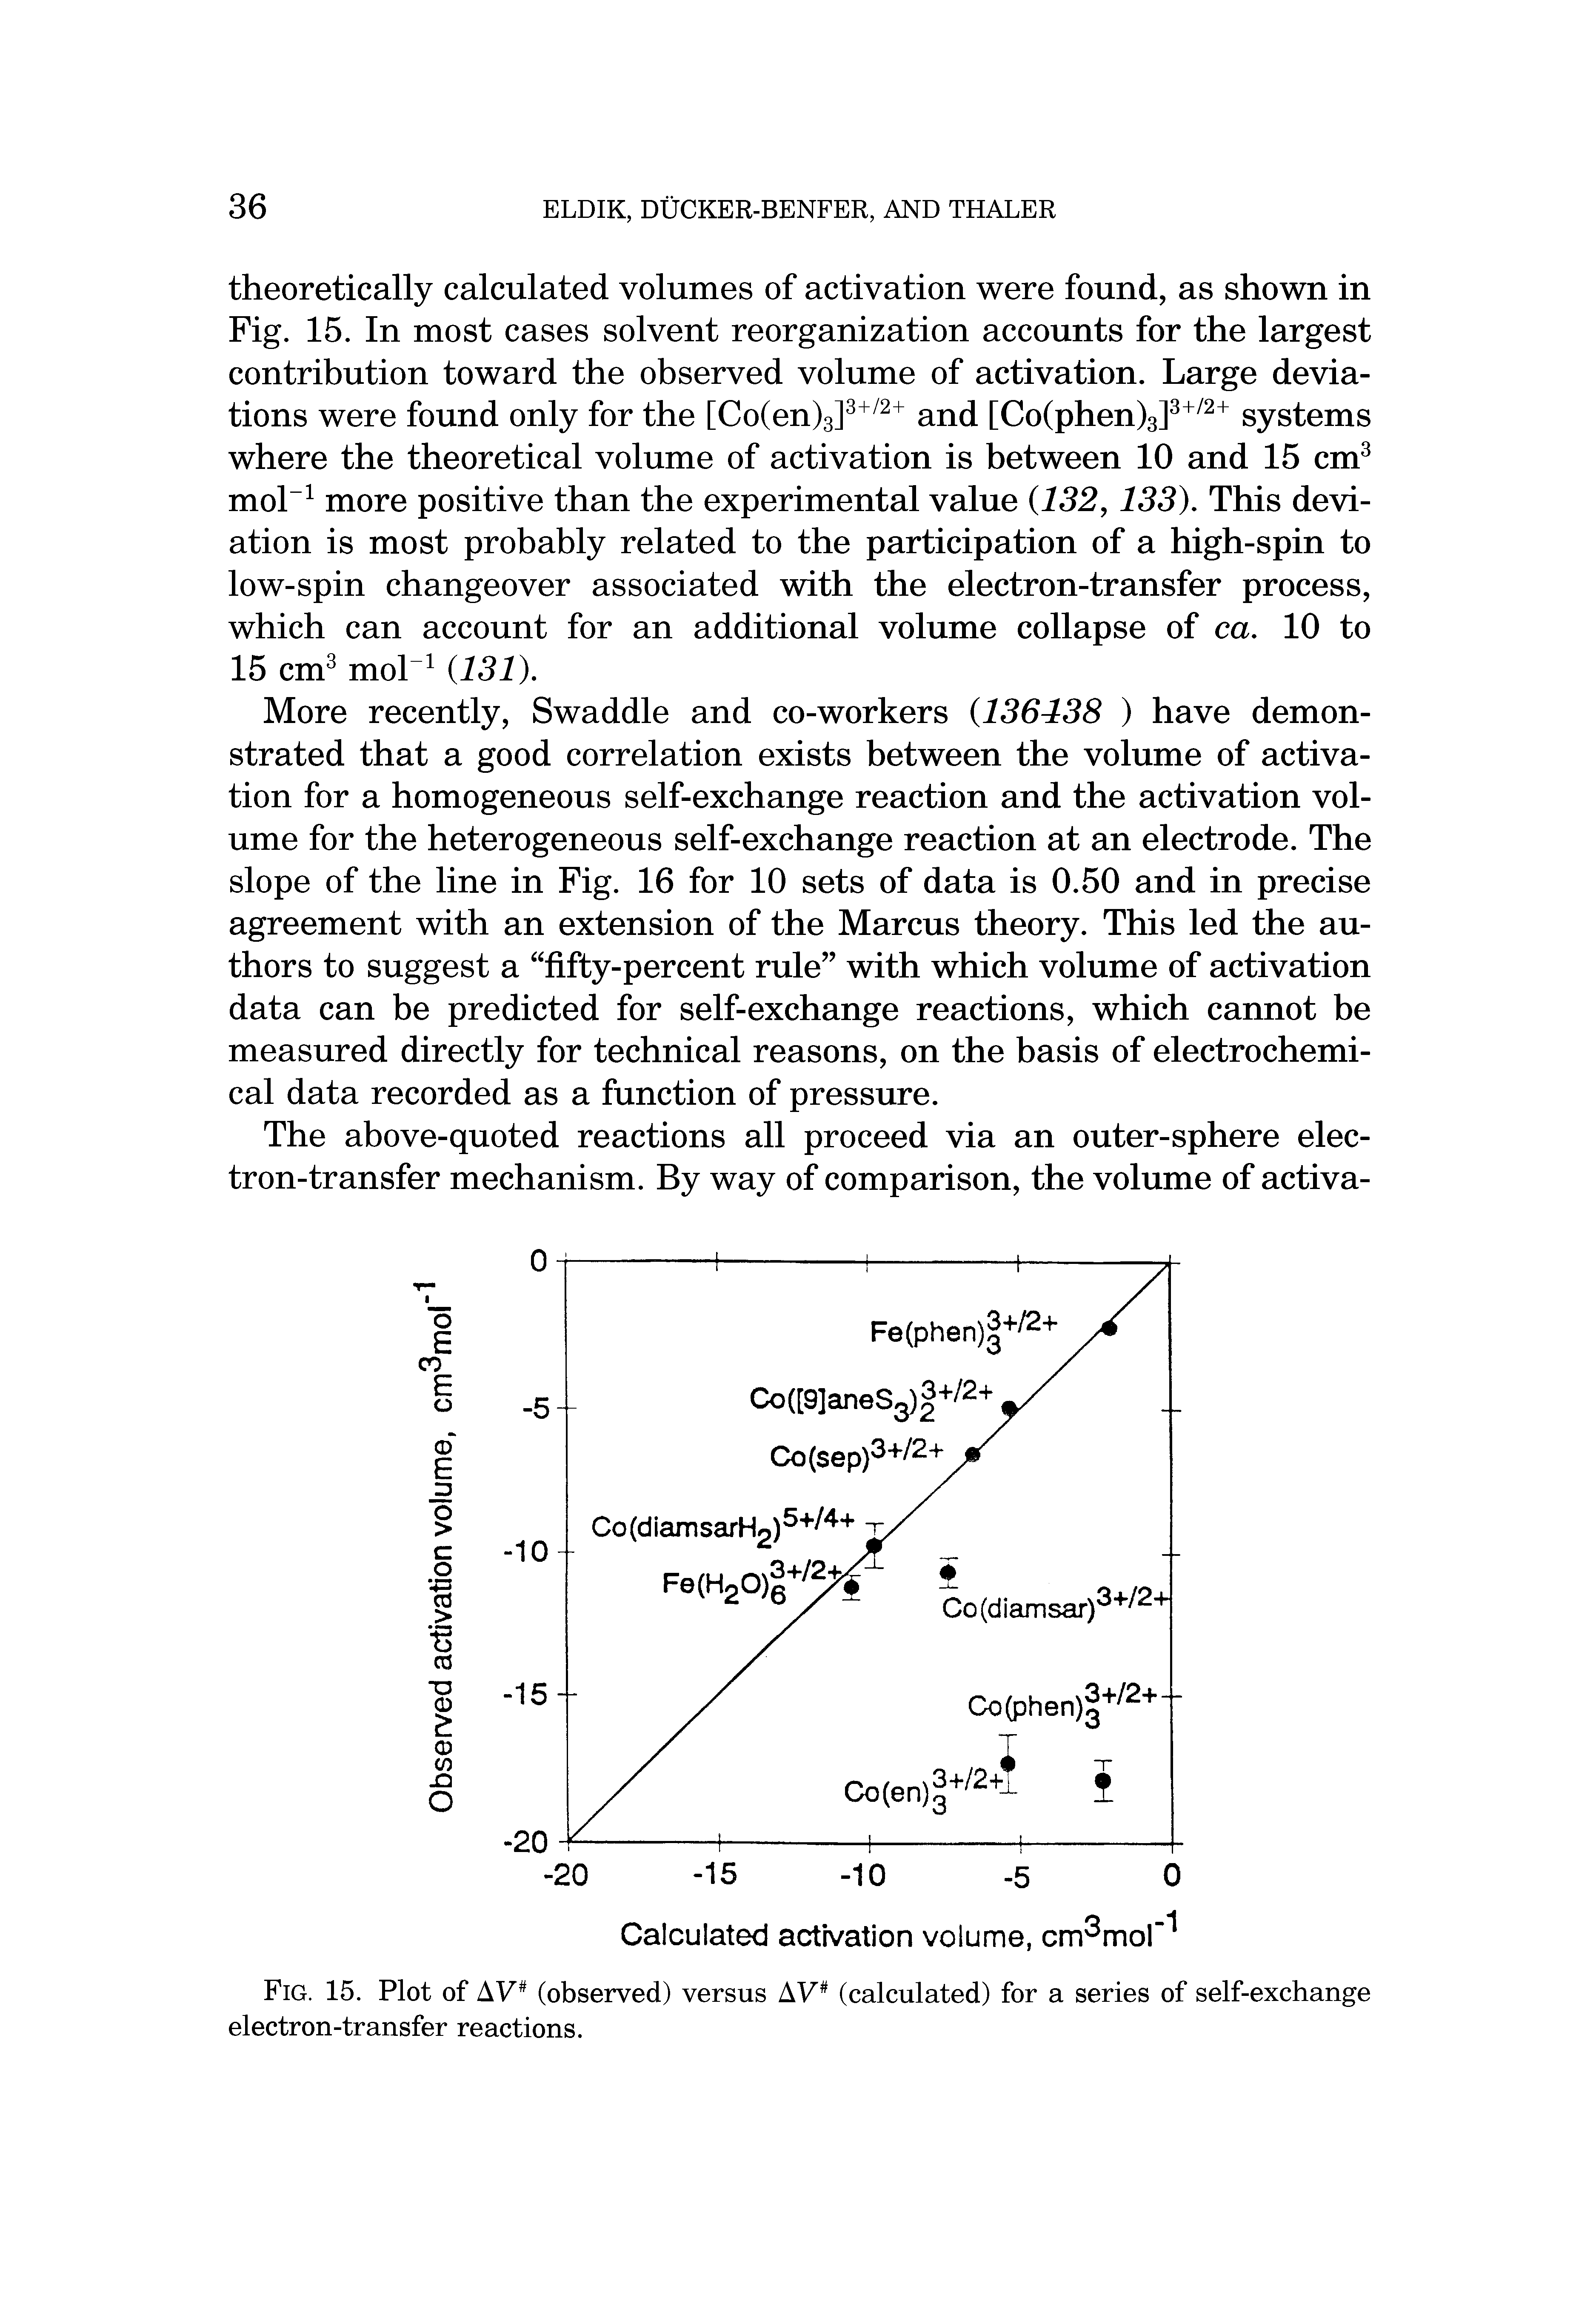 Fig. 15. Plot of AV (observed) versus AV (calculated) for a series of self-exchange electron-transfer reactions.